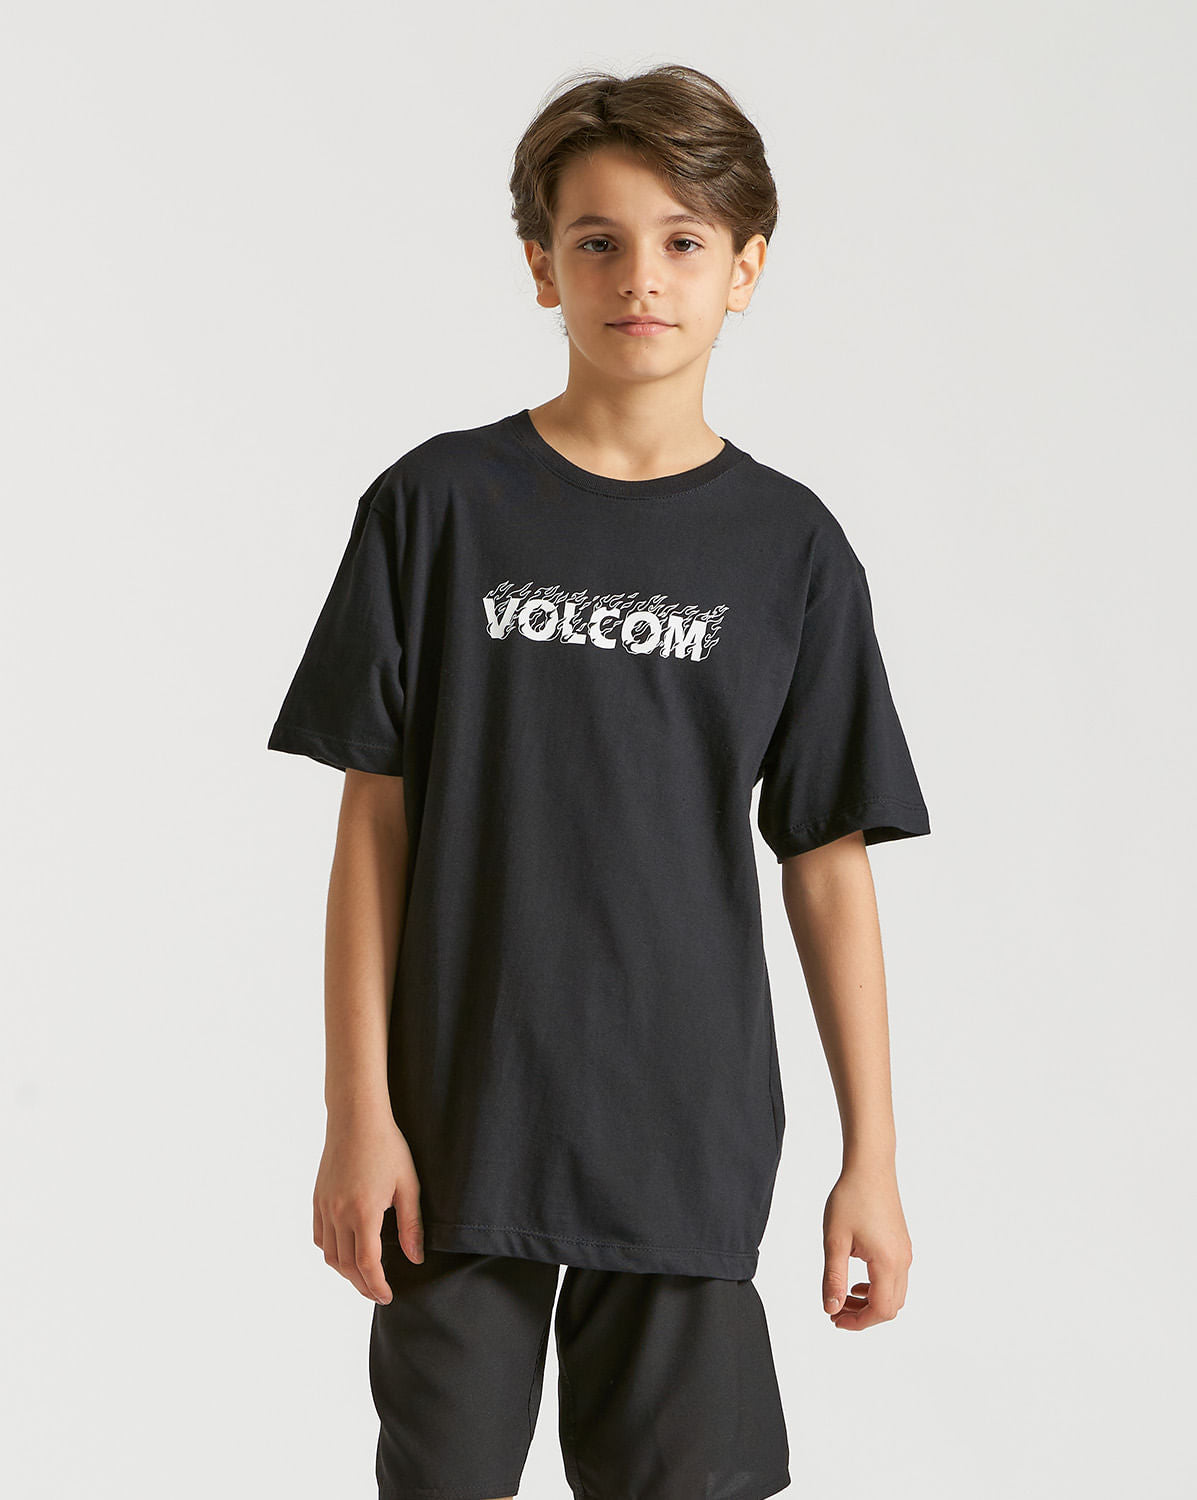 Camiseta Volcom Regular Fire Fight Juvenil Preto